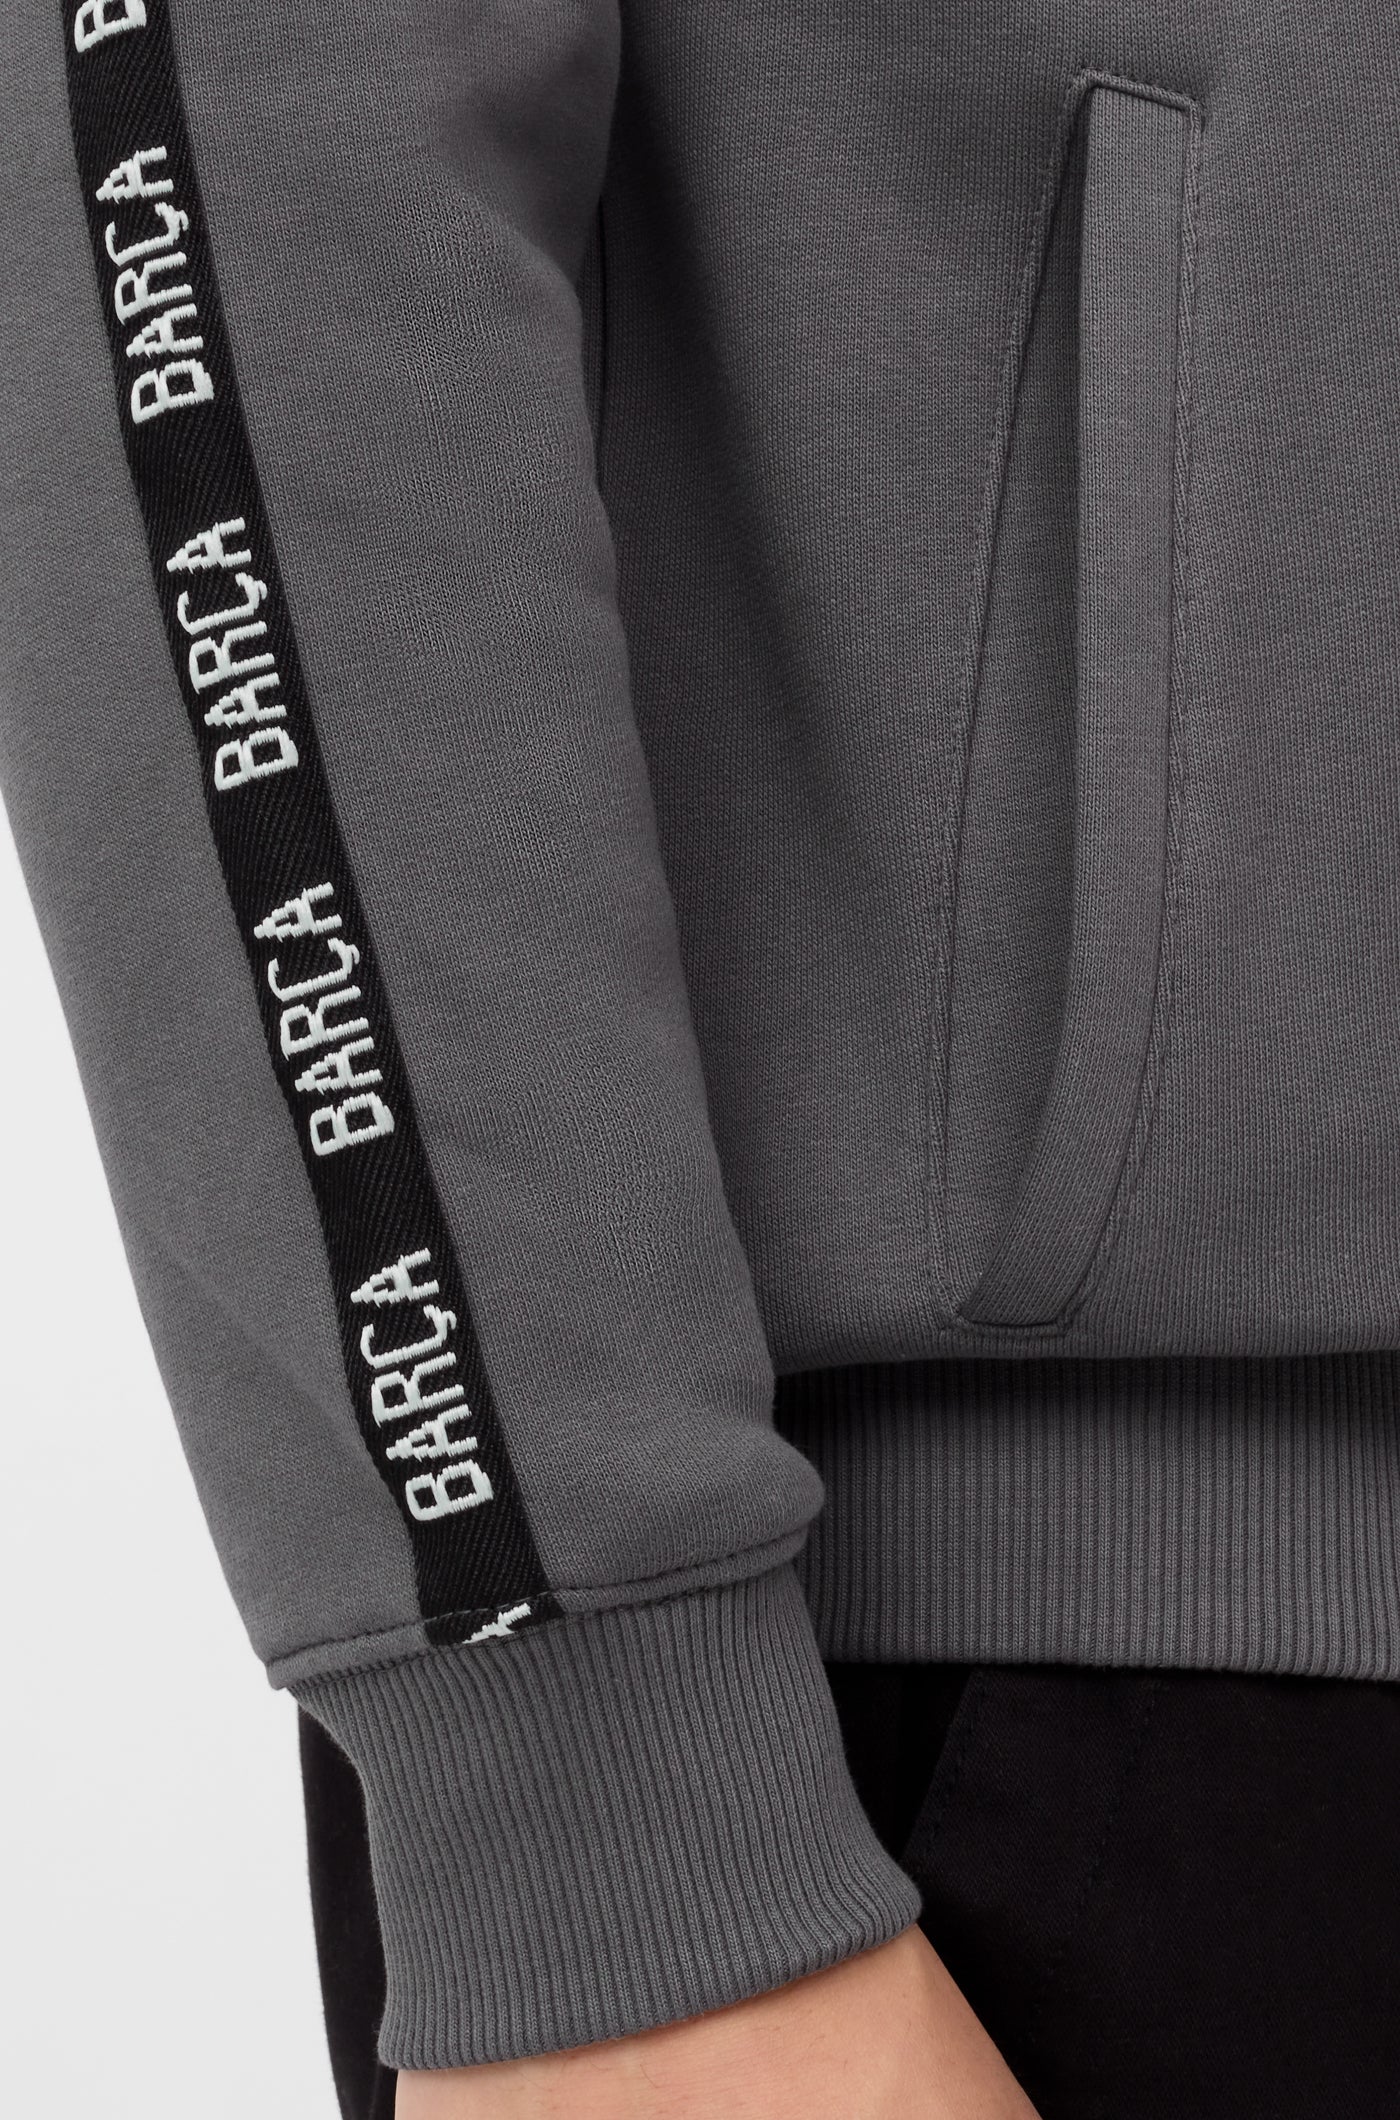 Barça grey hoodie - Numerology